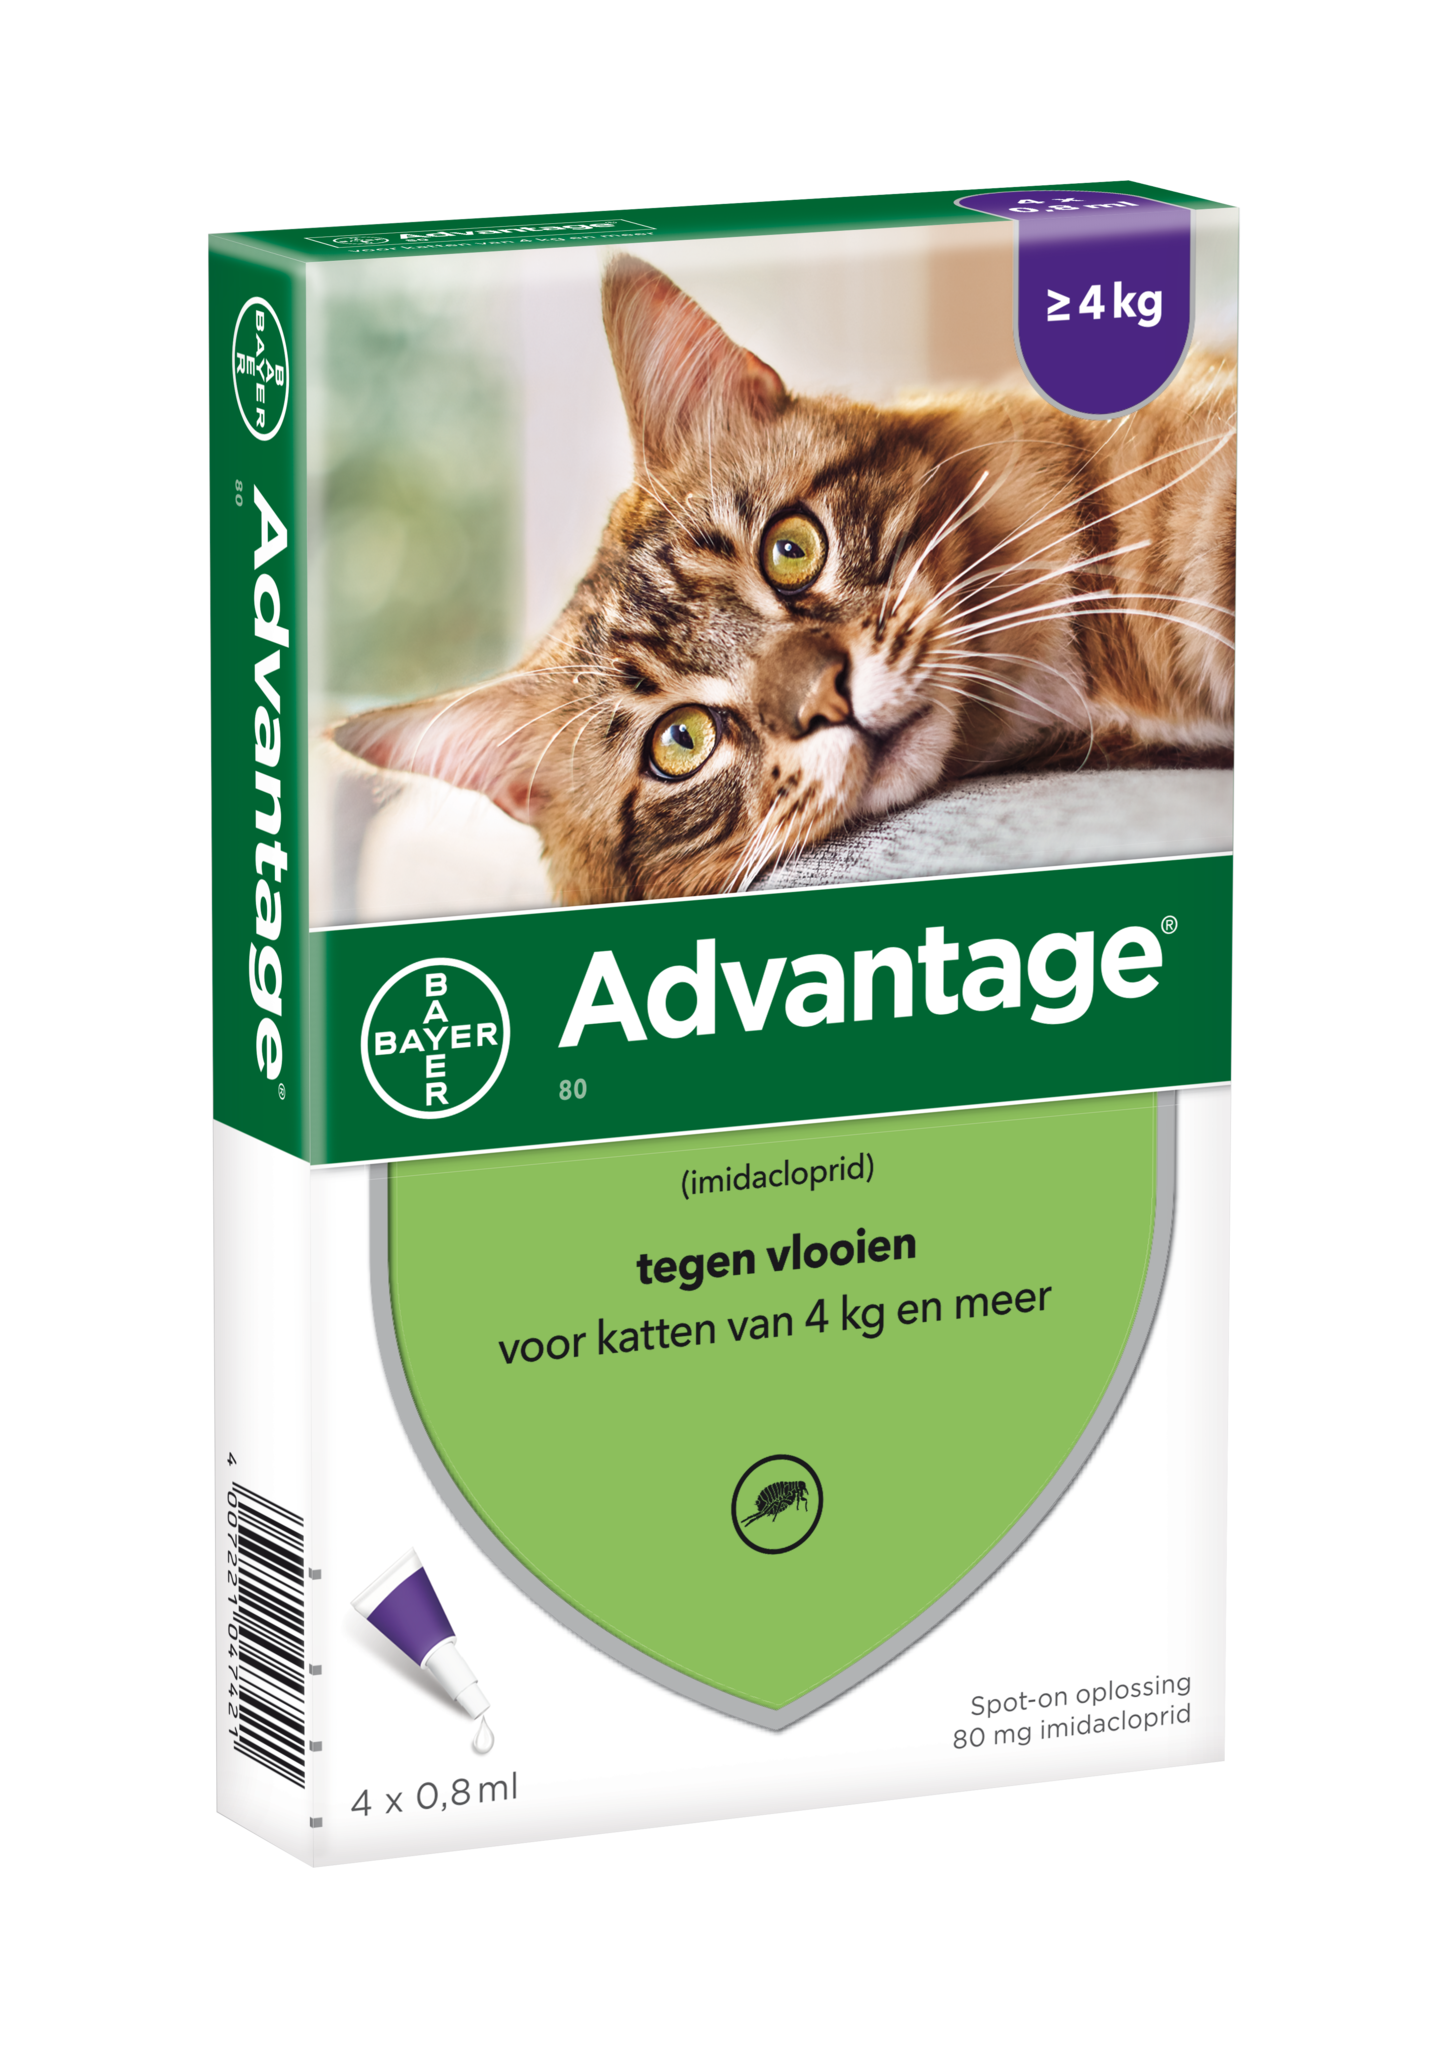 advantage for cats